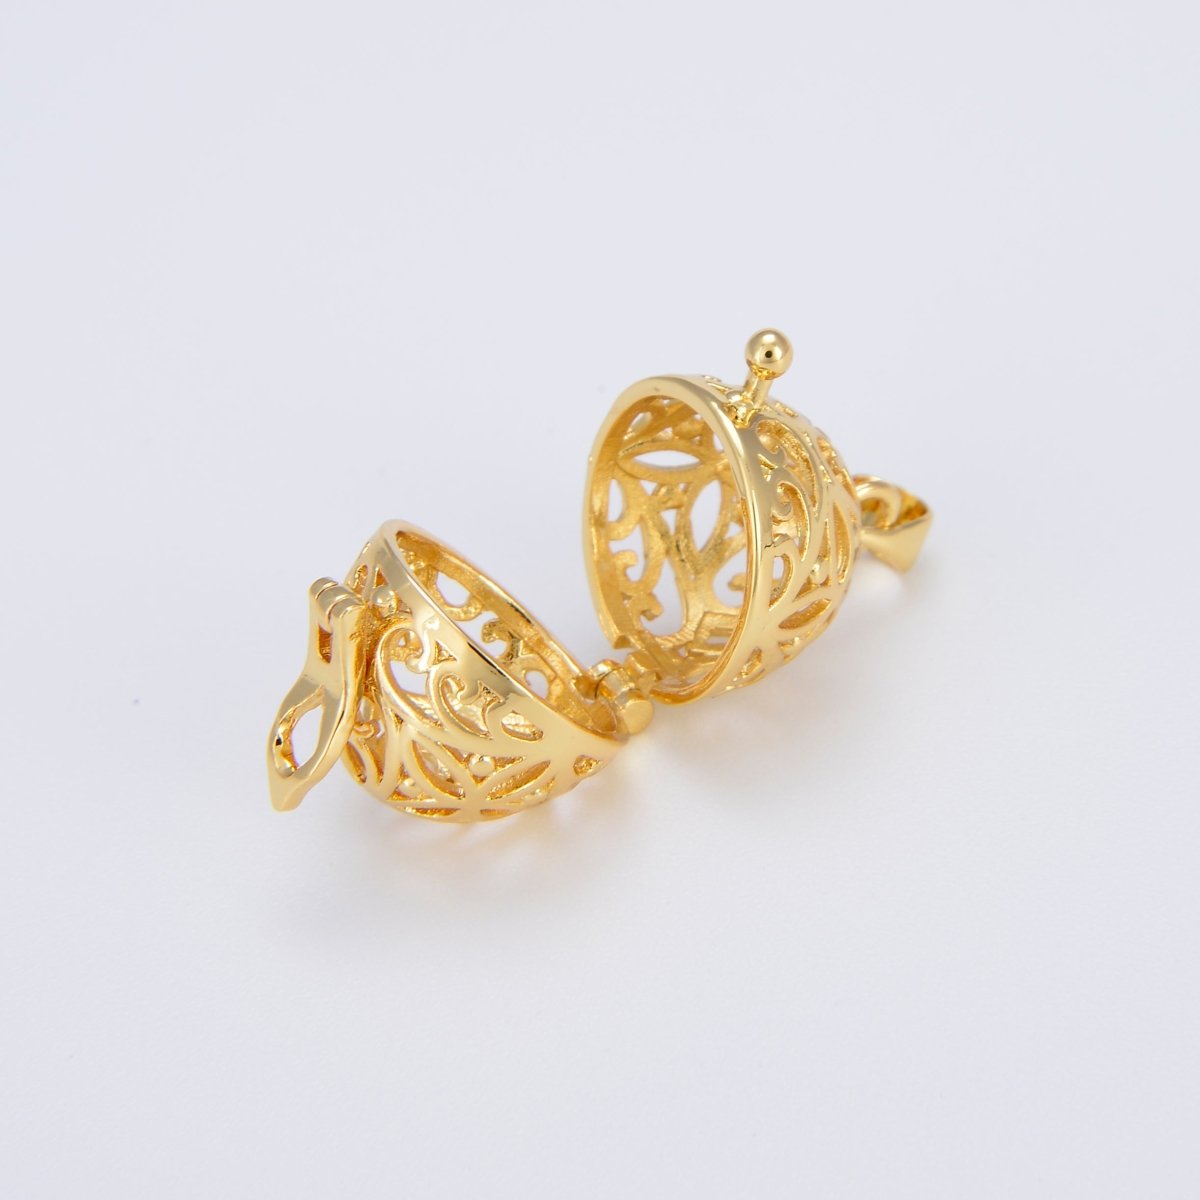 Healing Stone cage locket pendant Gold EGG Pendant, Gemstone Diffused Jewelry Making, DIY Gemstone Natural Stone Locket Charms necklace H-740 - DLUXCA